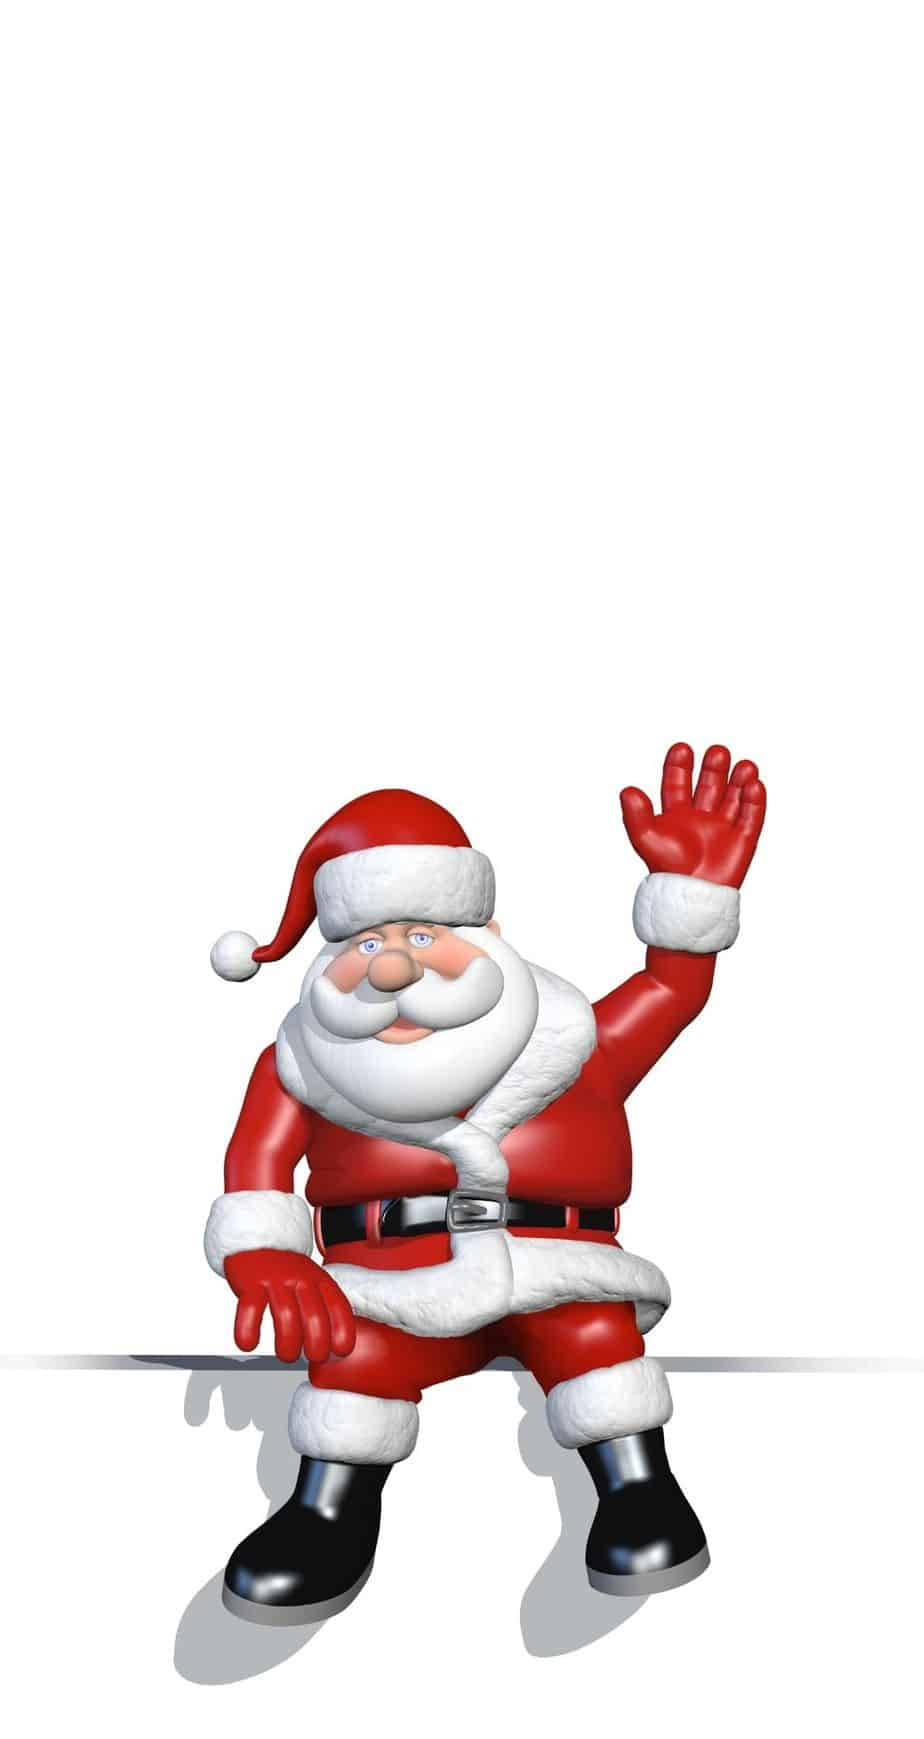 Greeting Santa Claus Christmas IPhone Wallpaper